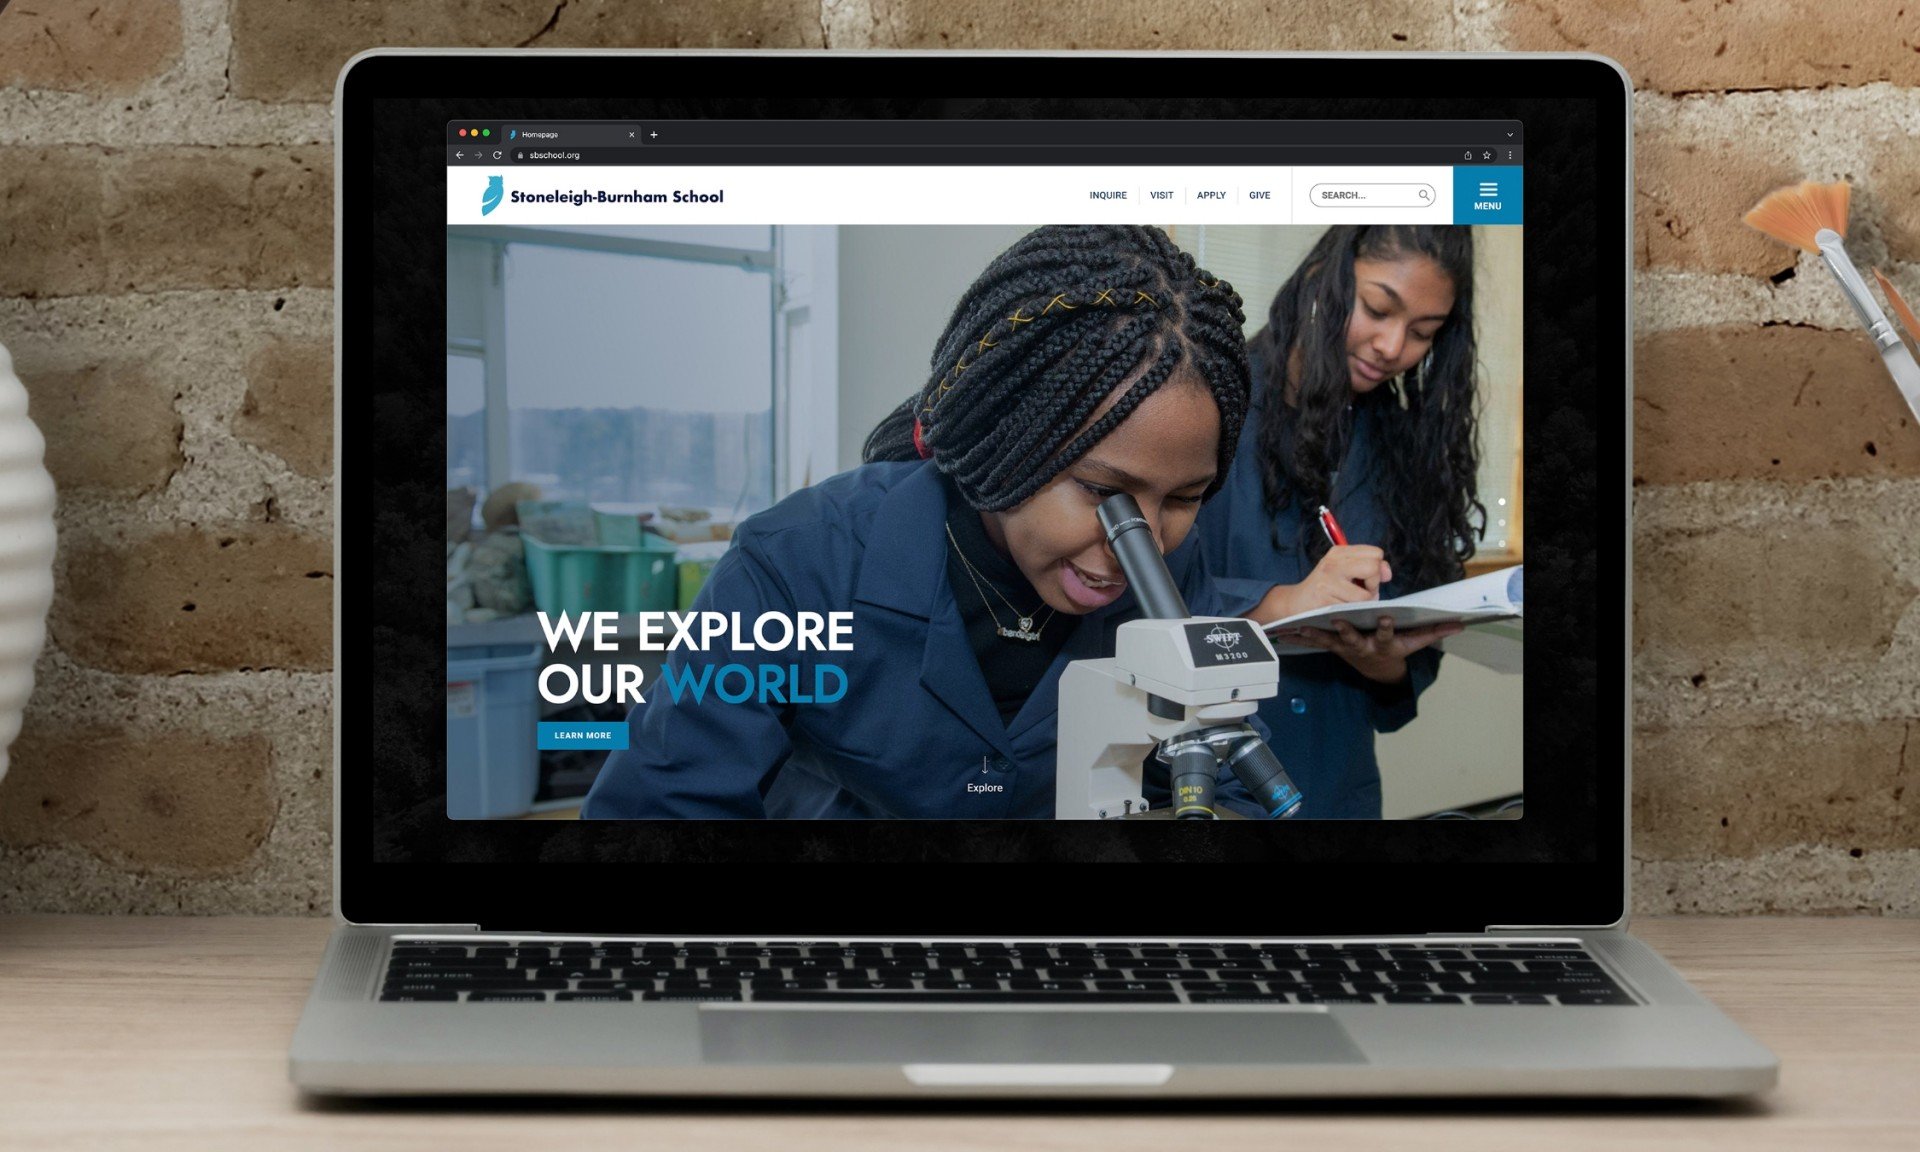 Stoneleigh-Burnham School Launches New Website